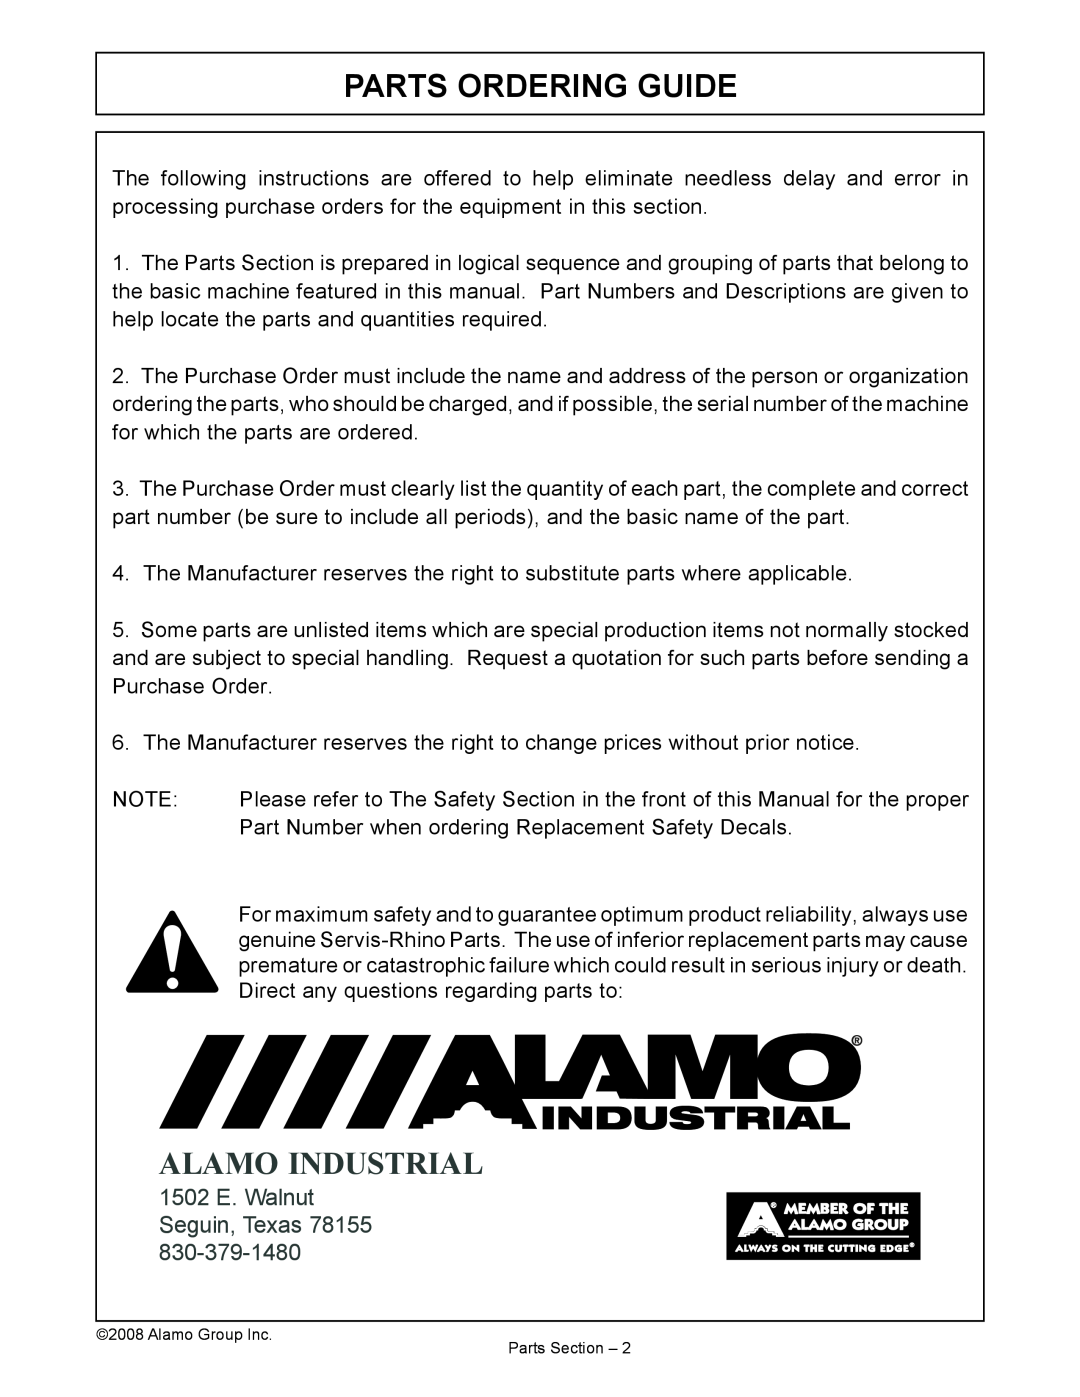 Alamo 02986941P manual Parts Ordering Guide, Alamo Industrial, 1502 E. Walnut Seguin, Texas 78155 